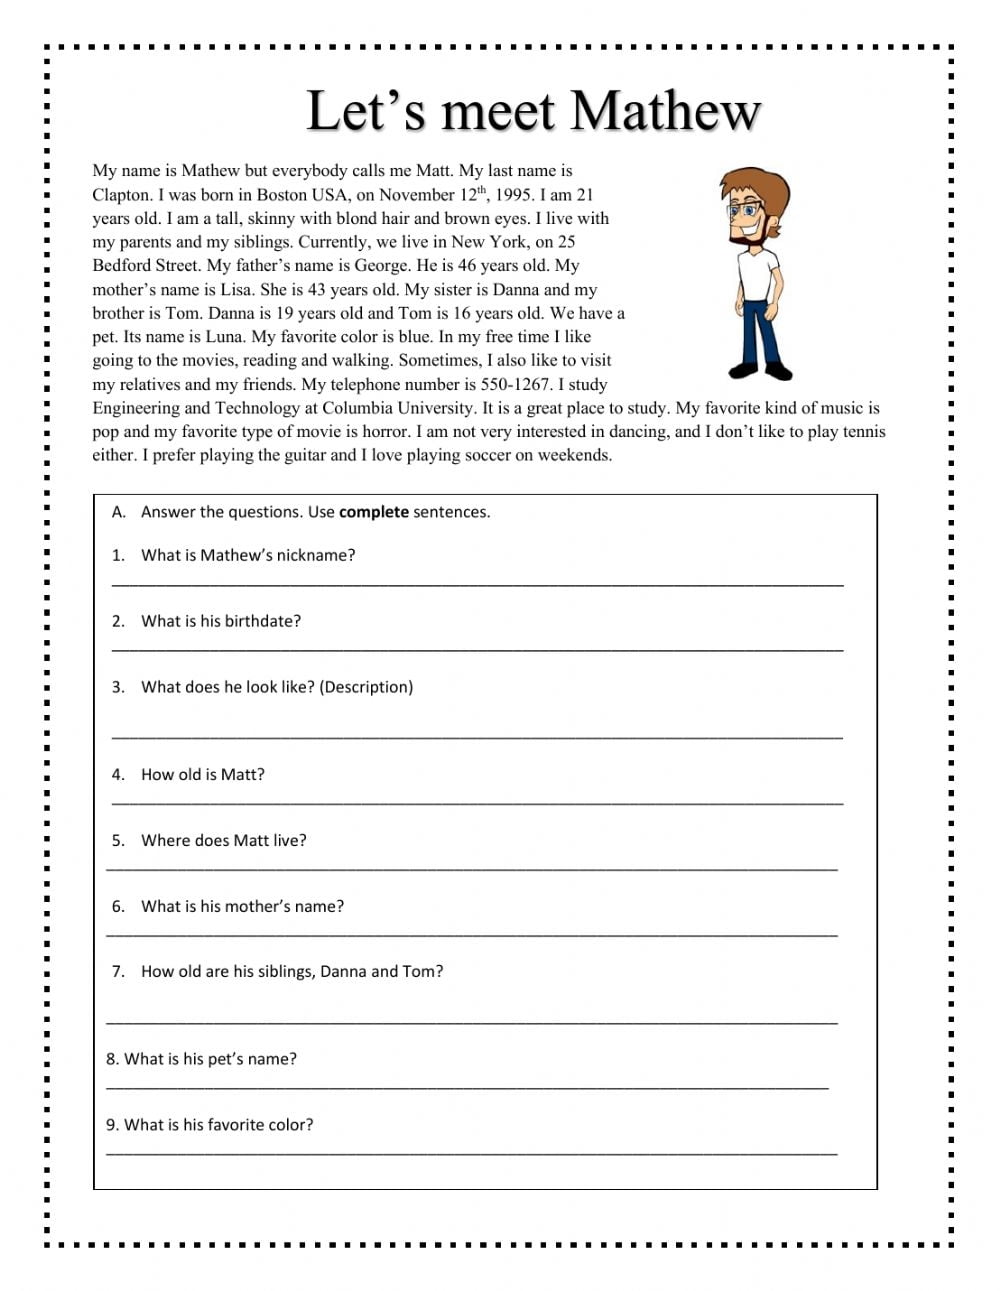 Personal Information Reading Comprehension Worksheet